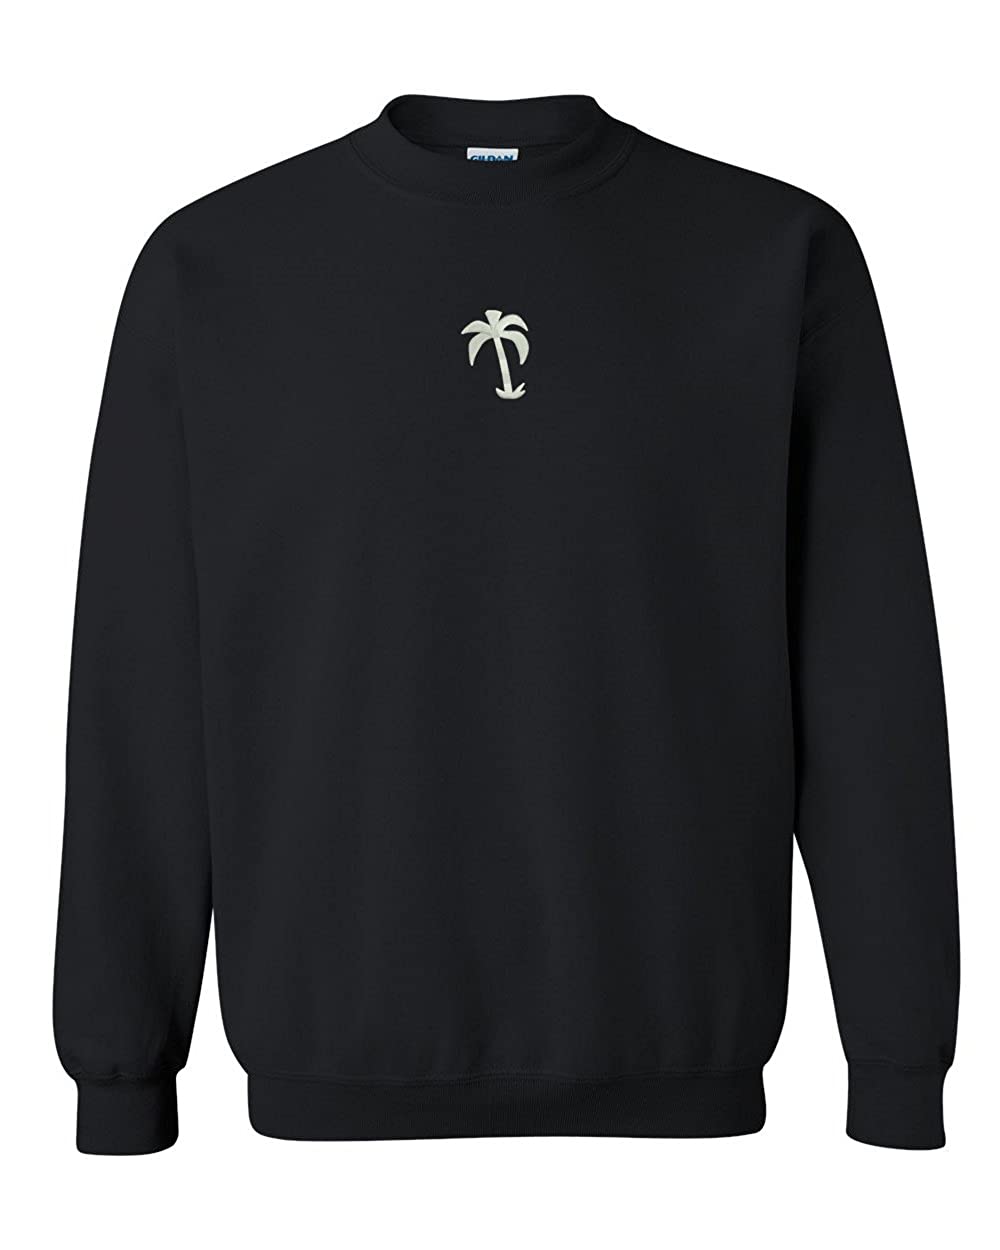 Trendy Apparel Shop Palm Tree Embroidered Crewneck Sweatshirt - Black - 2XL